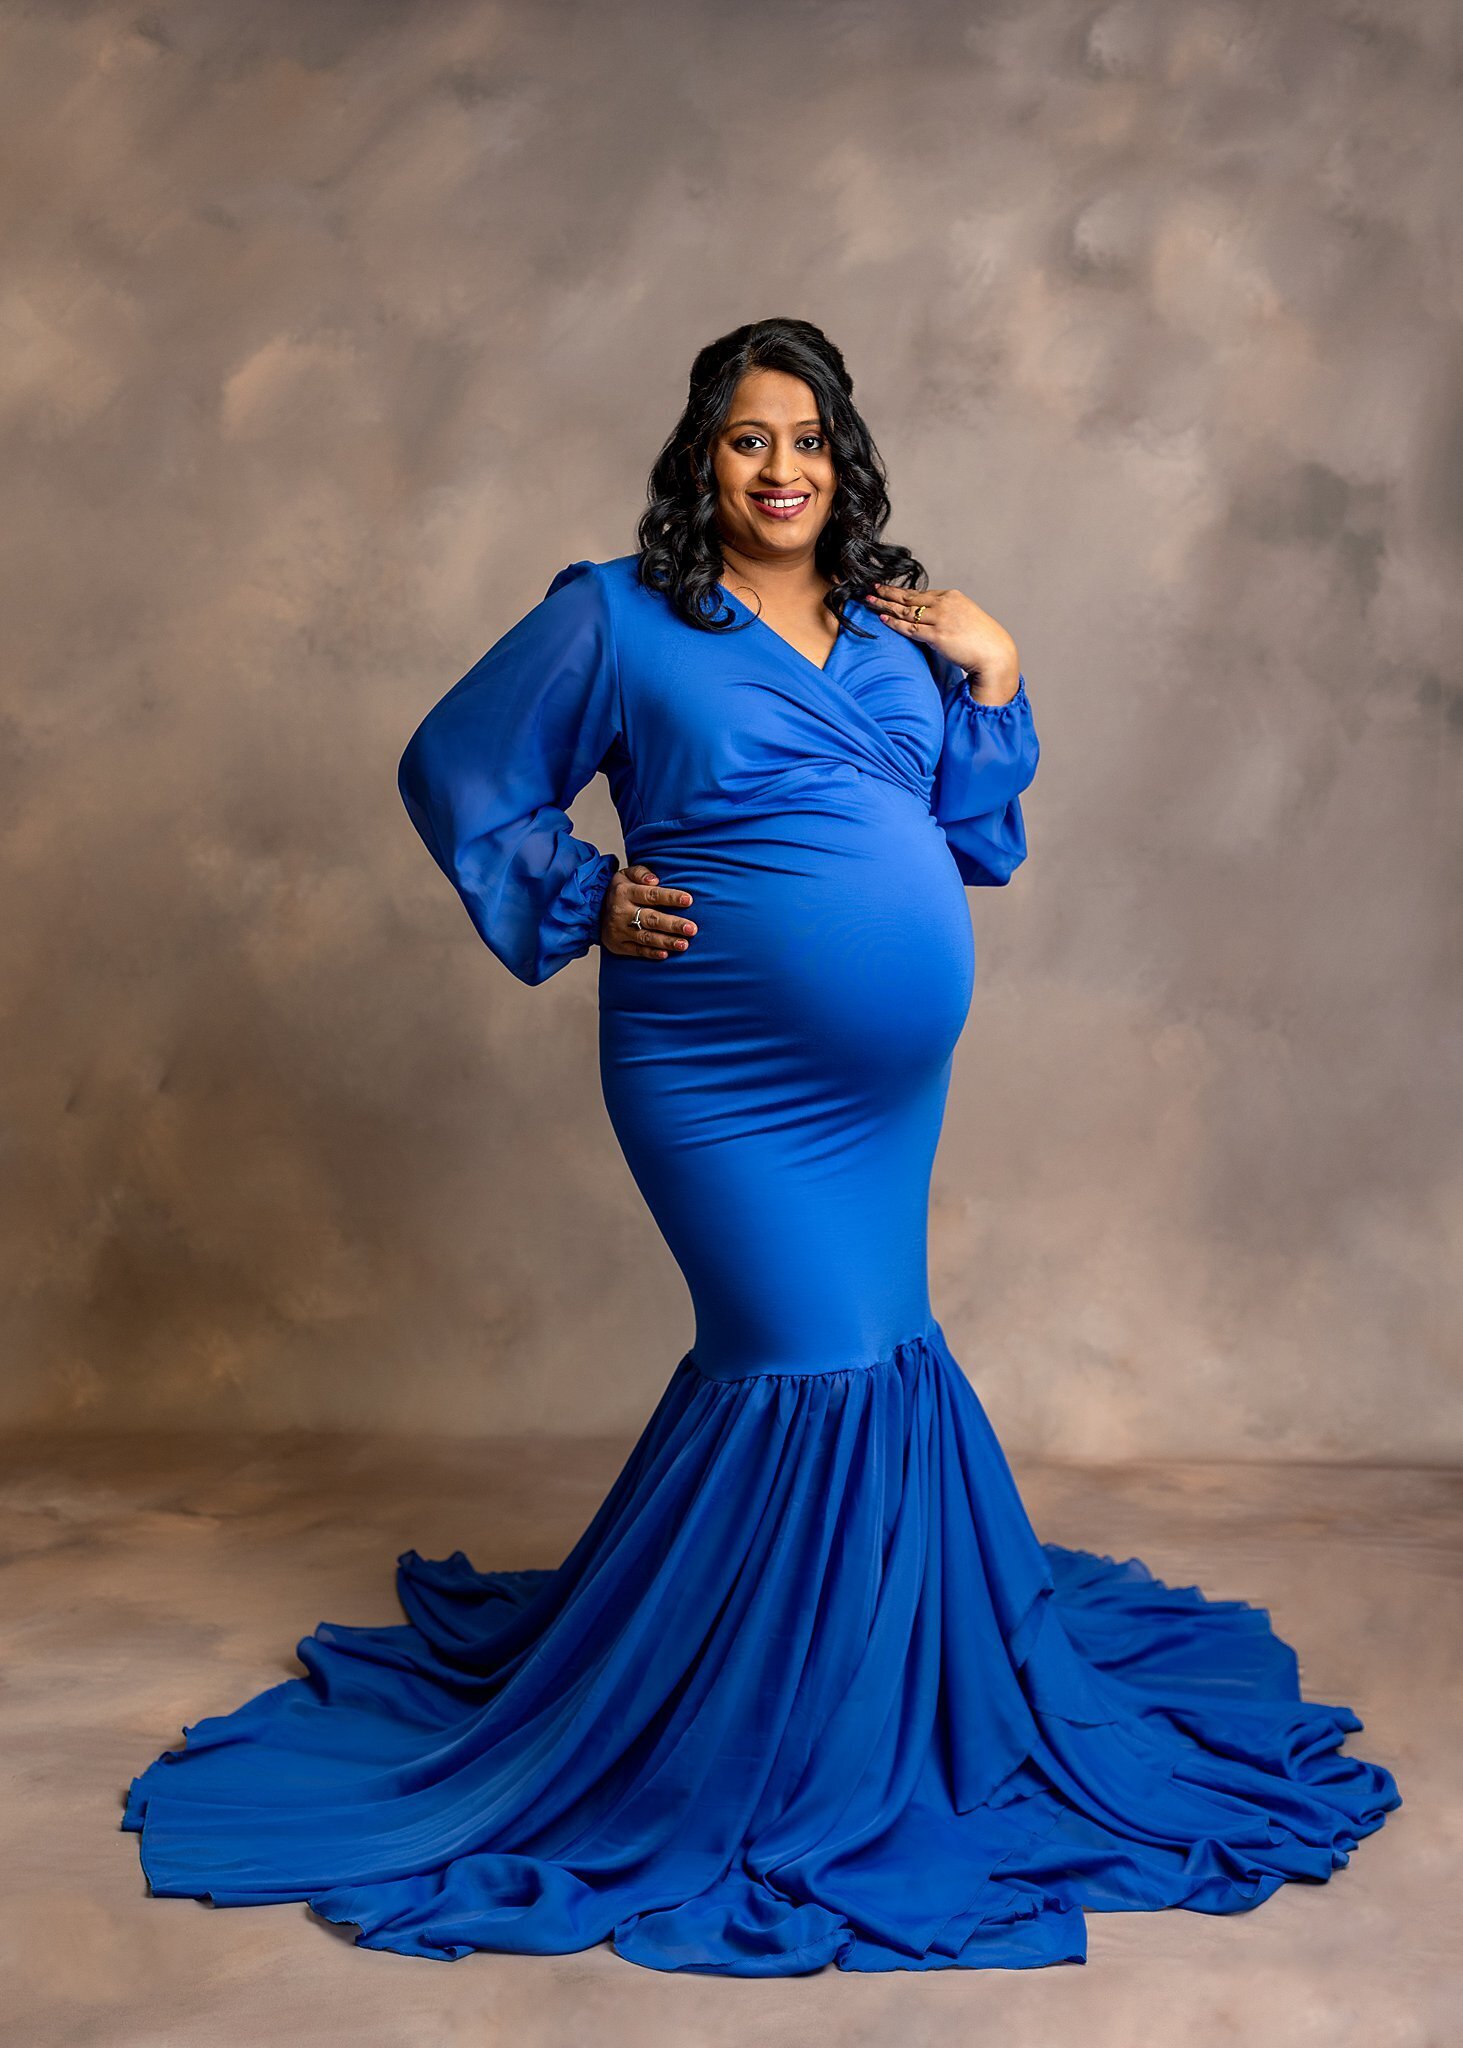 Pregnant mom wearing a blue dress.